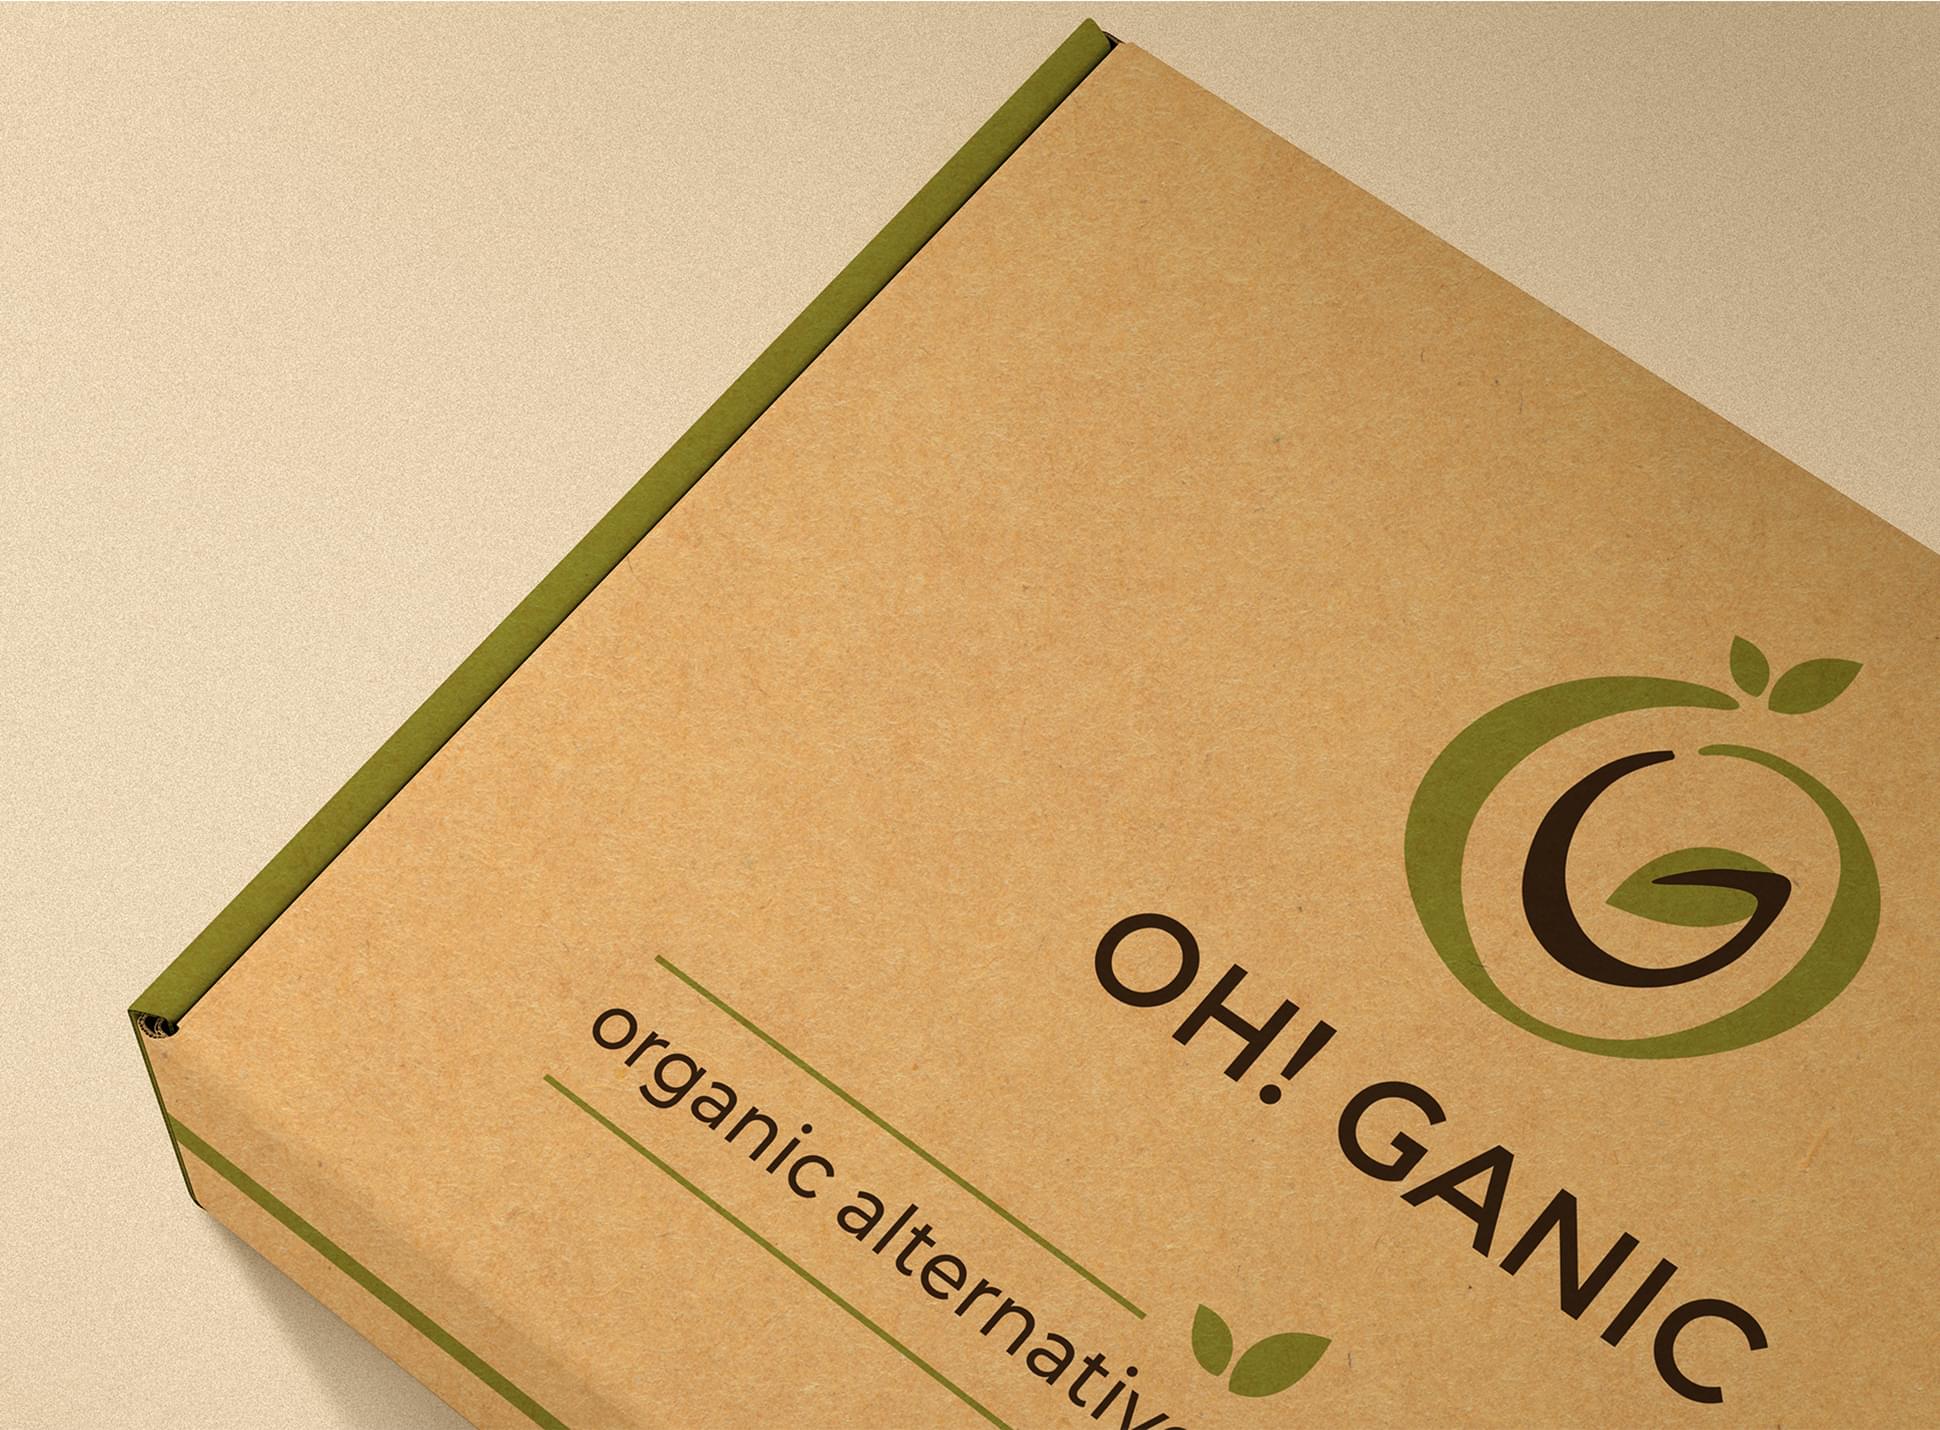 OH! GANIC Packaging